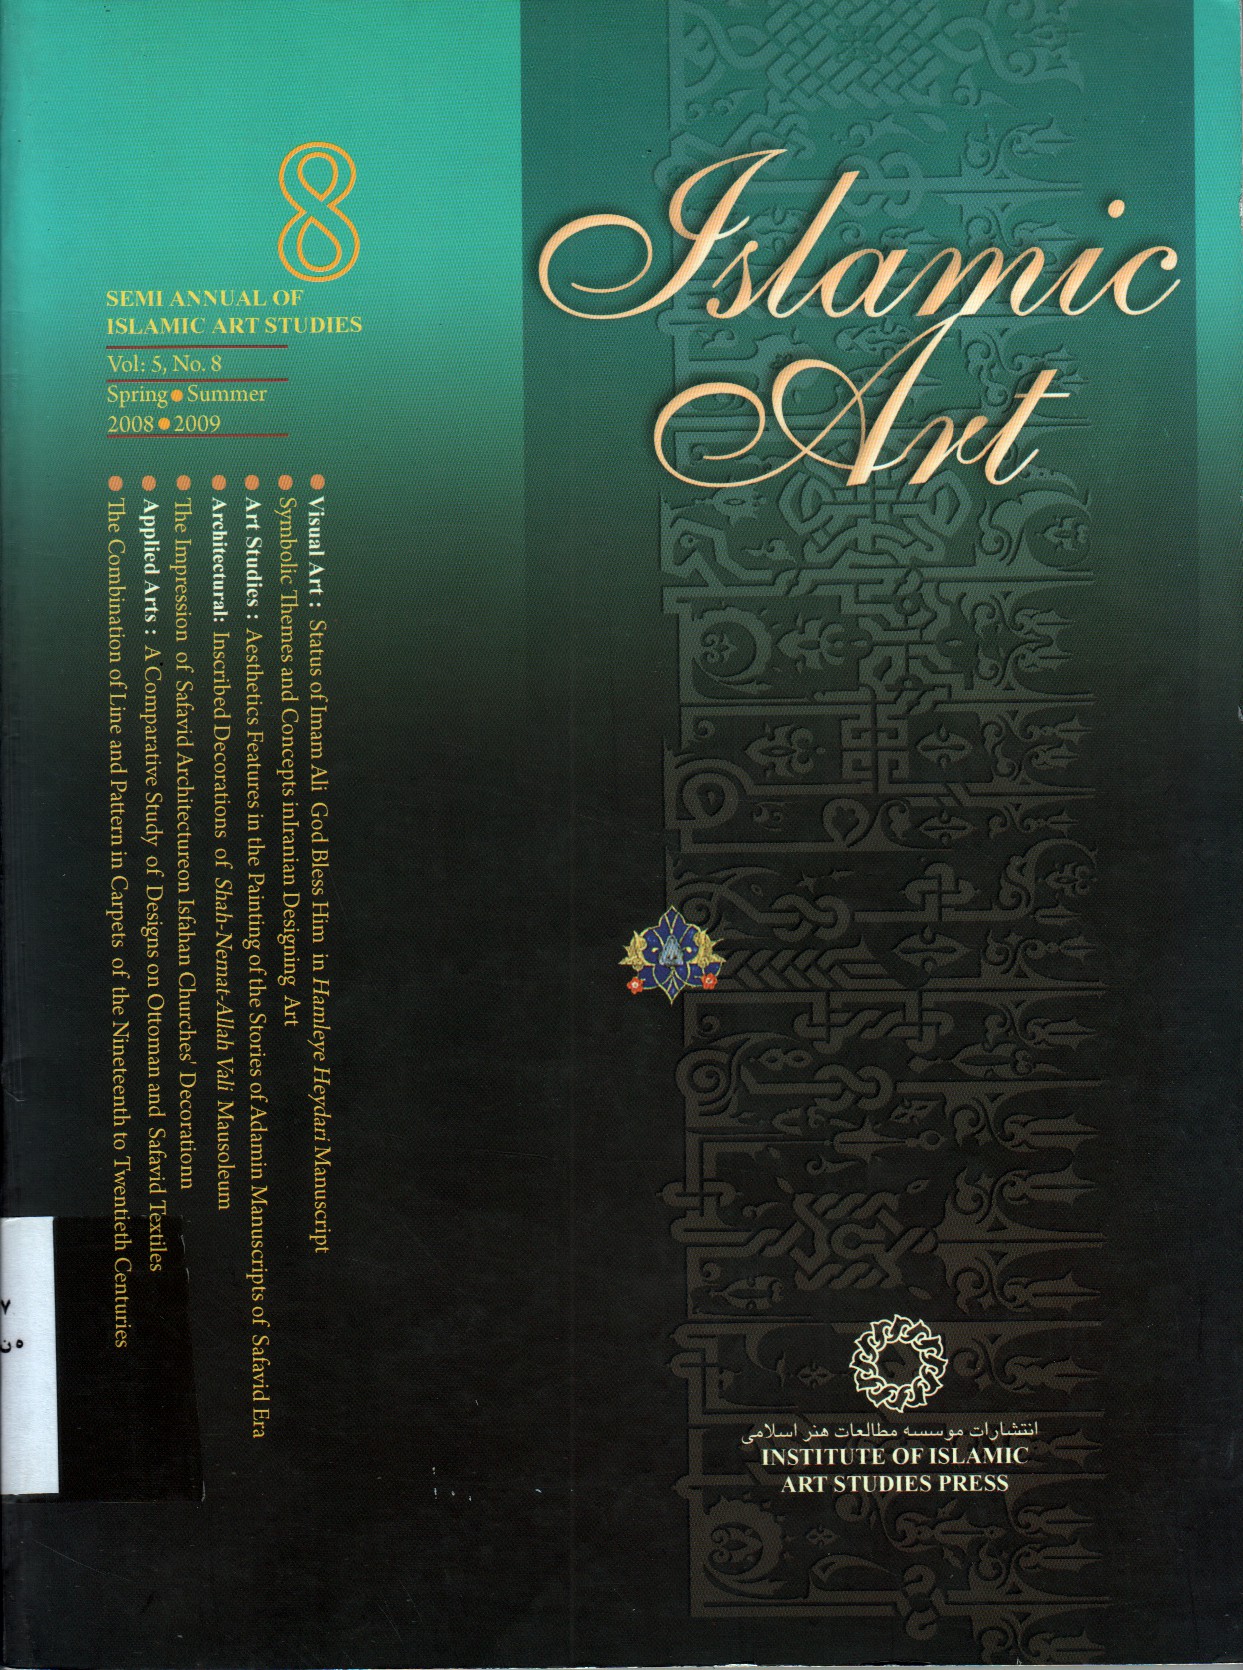 Islamic Art Studies